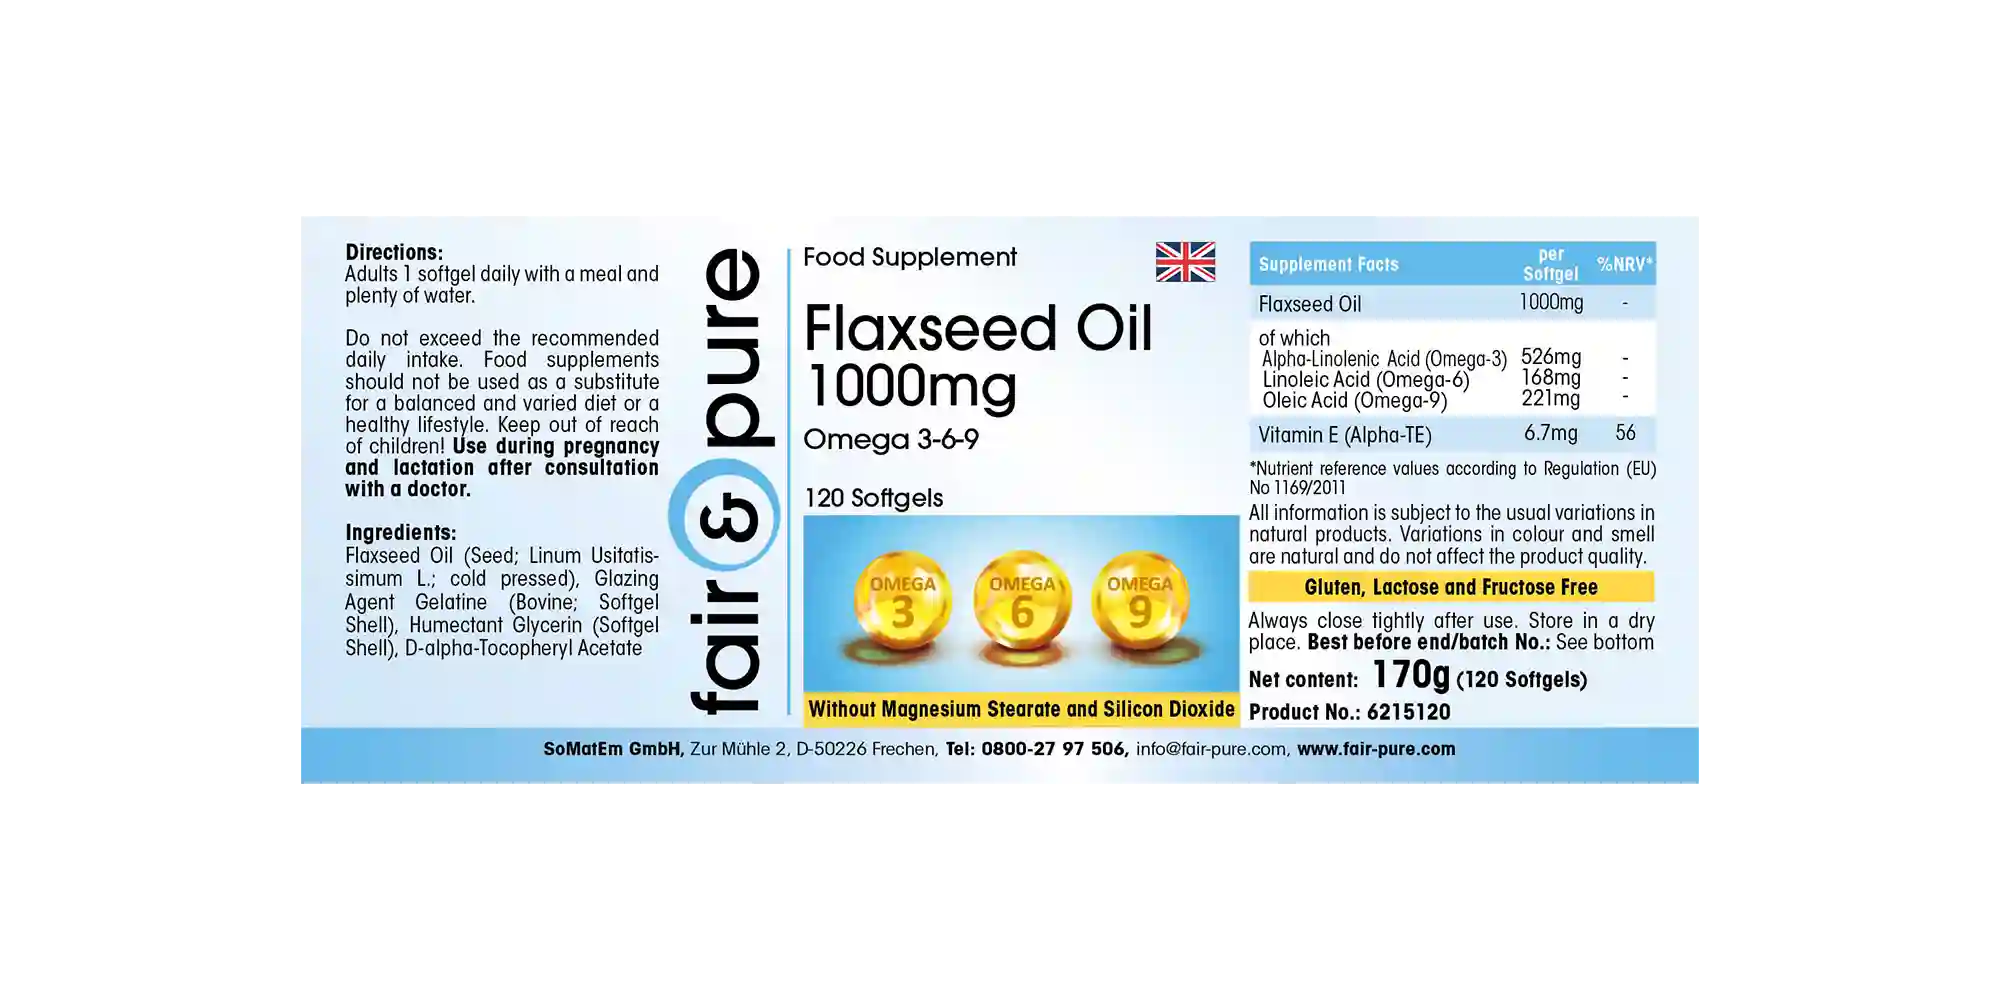 linseed oil 1000mg | Omega 3-6-9